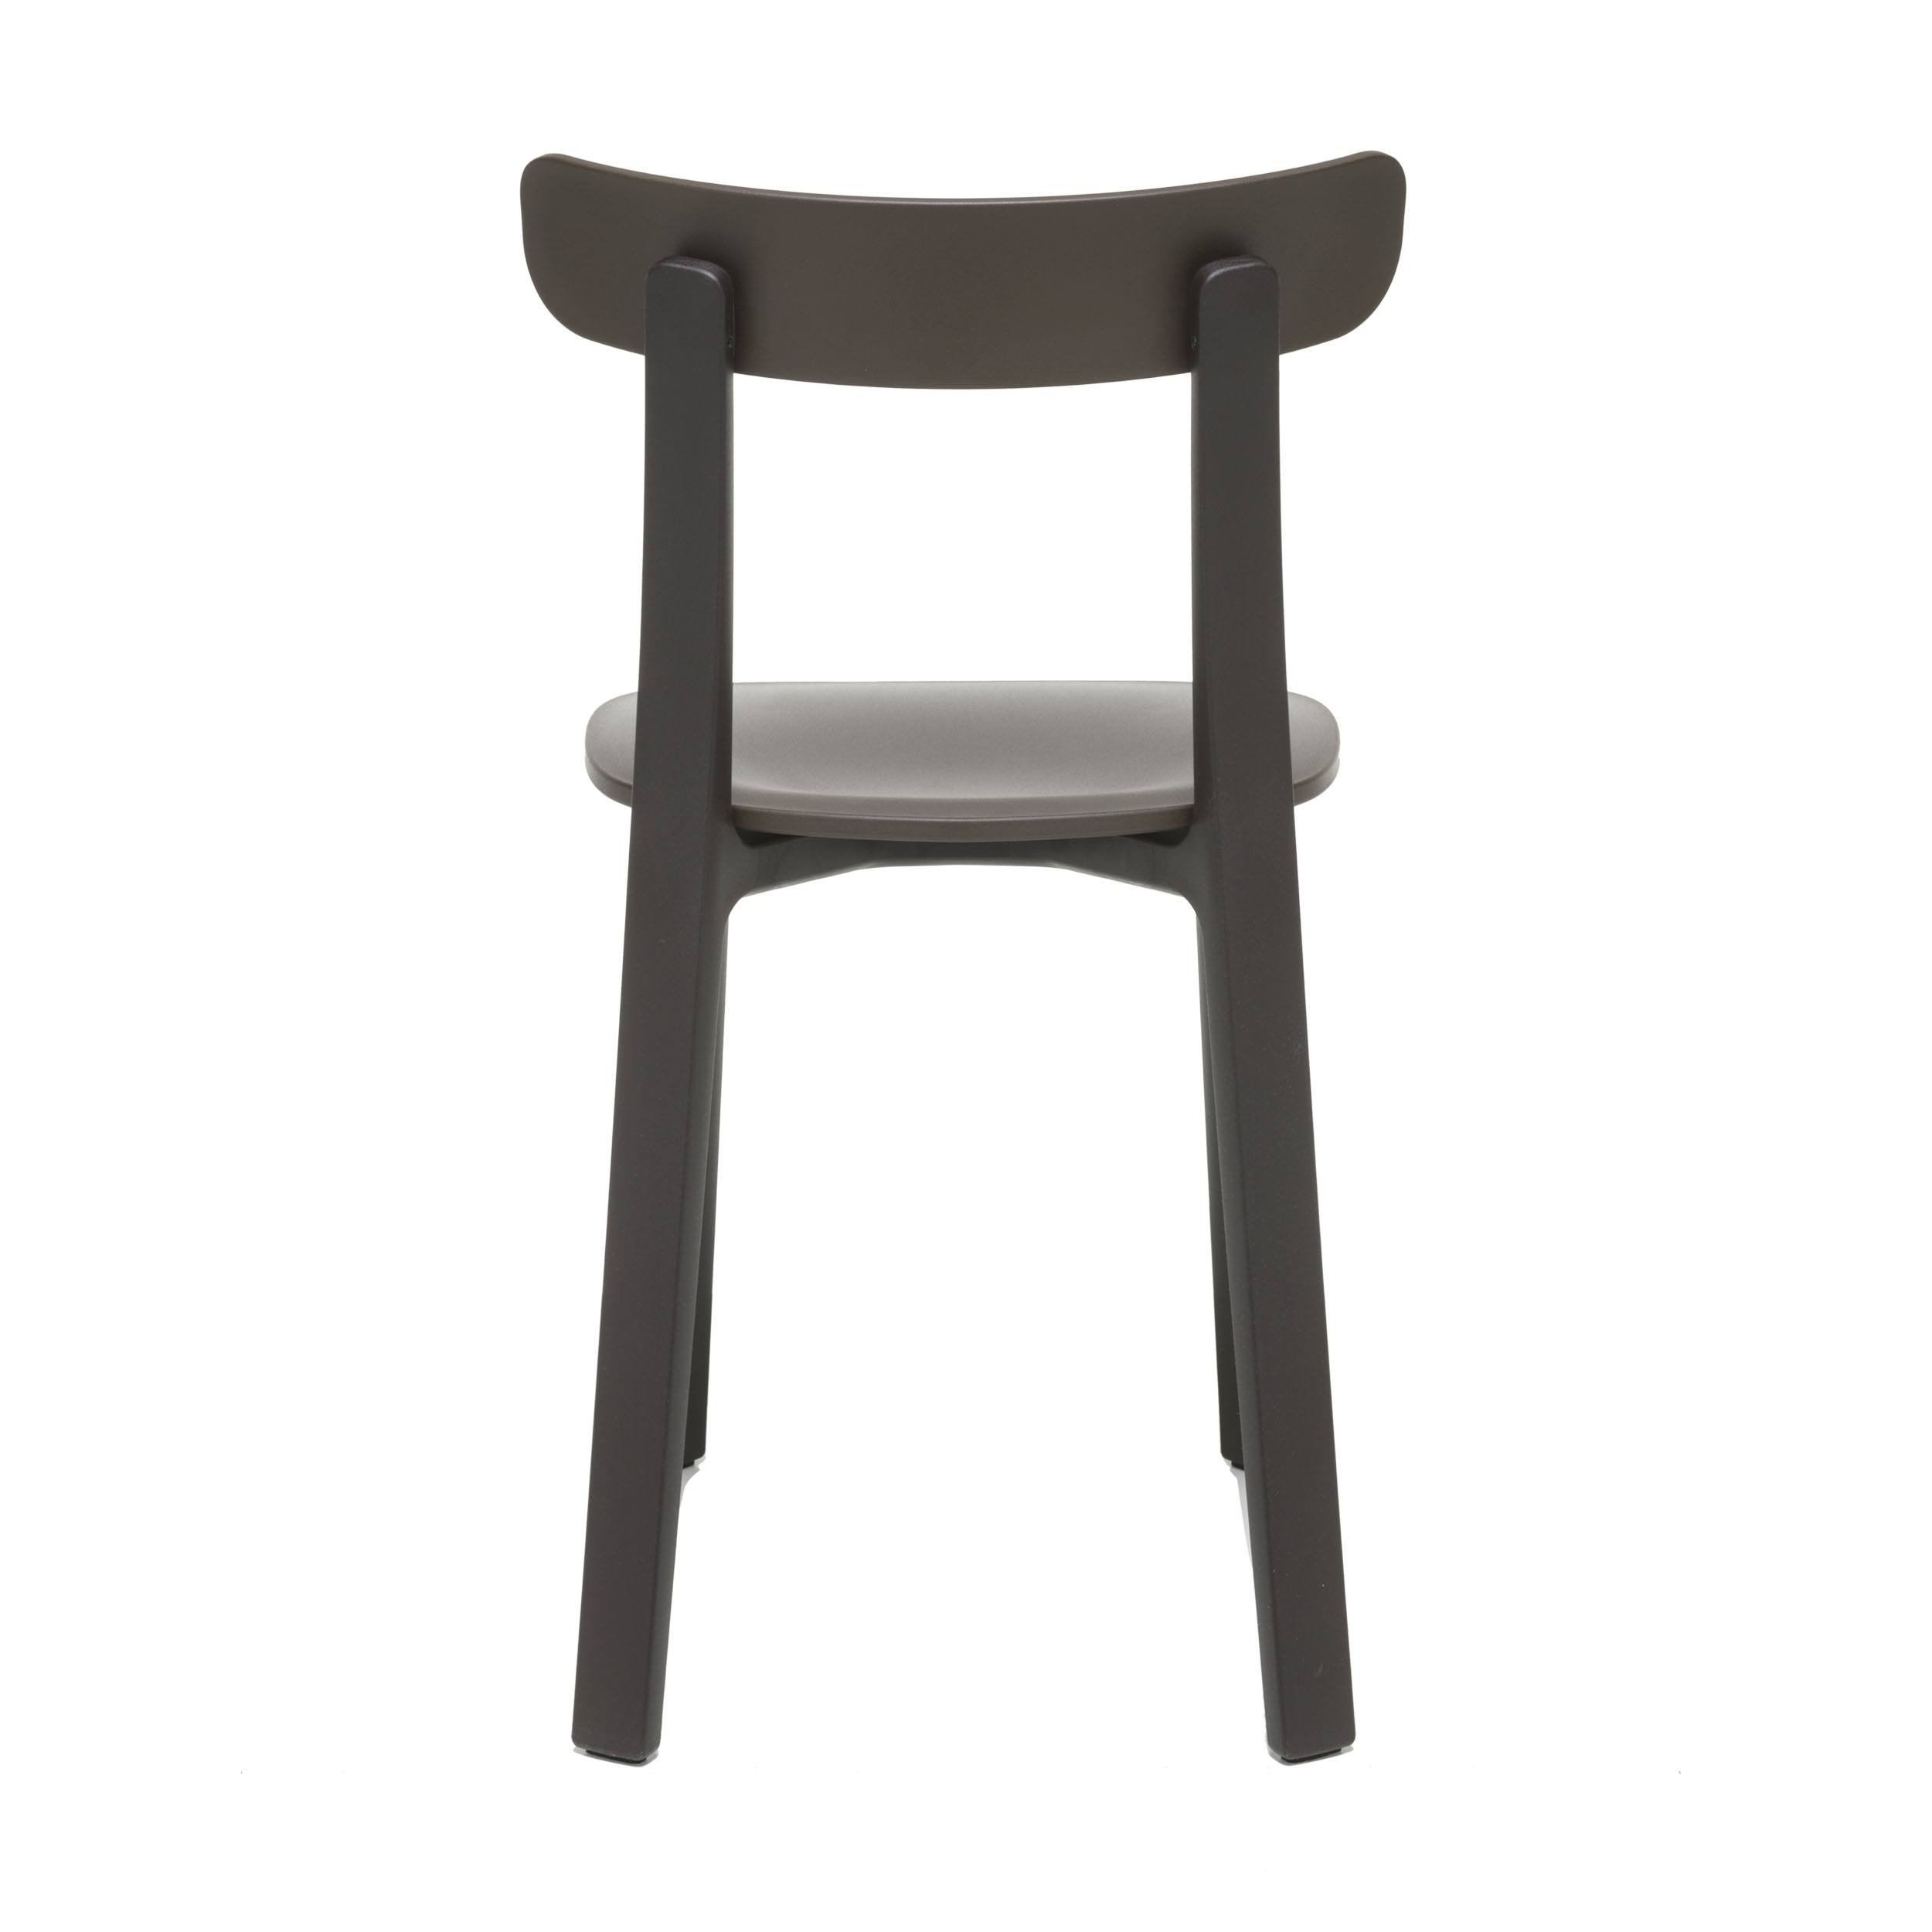 All Plastic Chair Stuhl